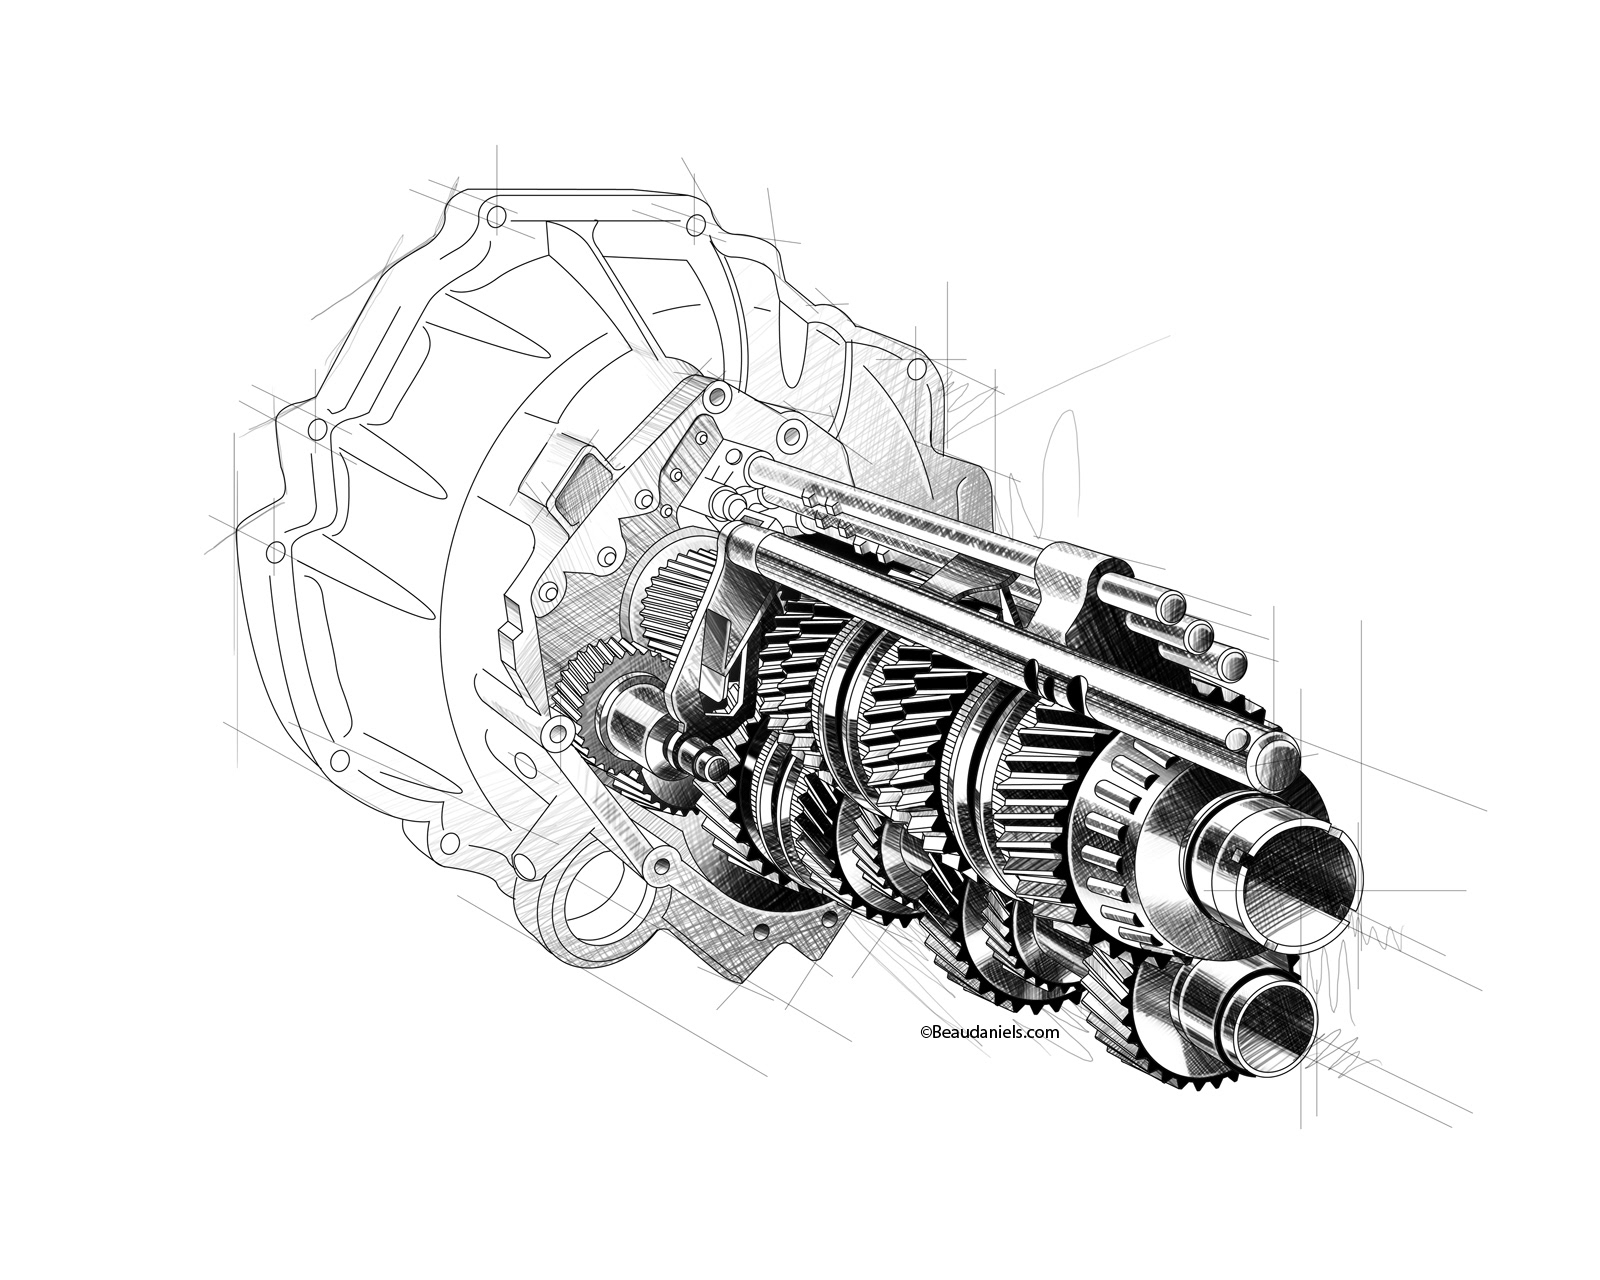 Technical illustration, Beau and Alan Daniels. Car transmission